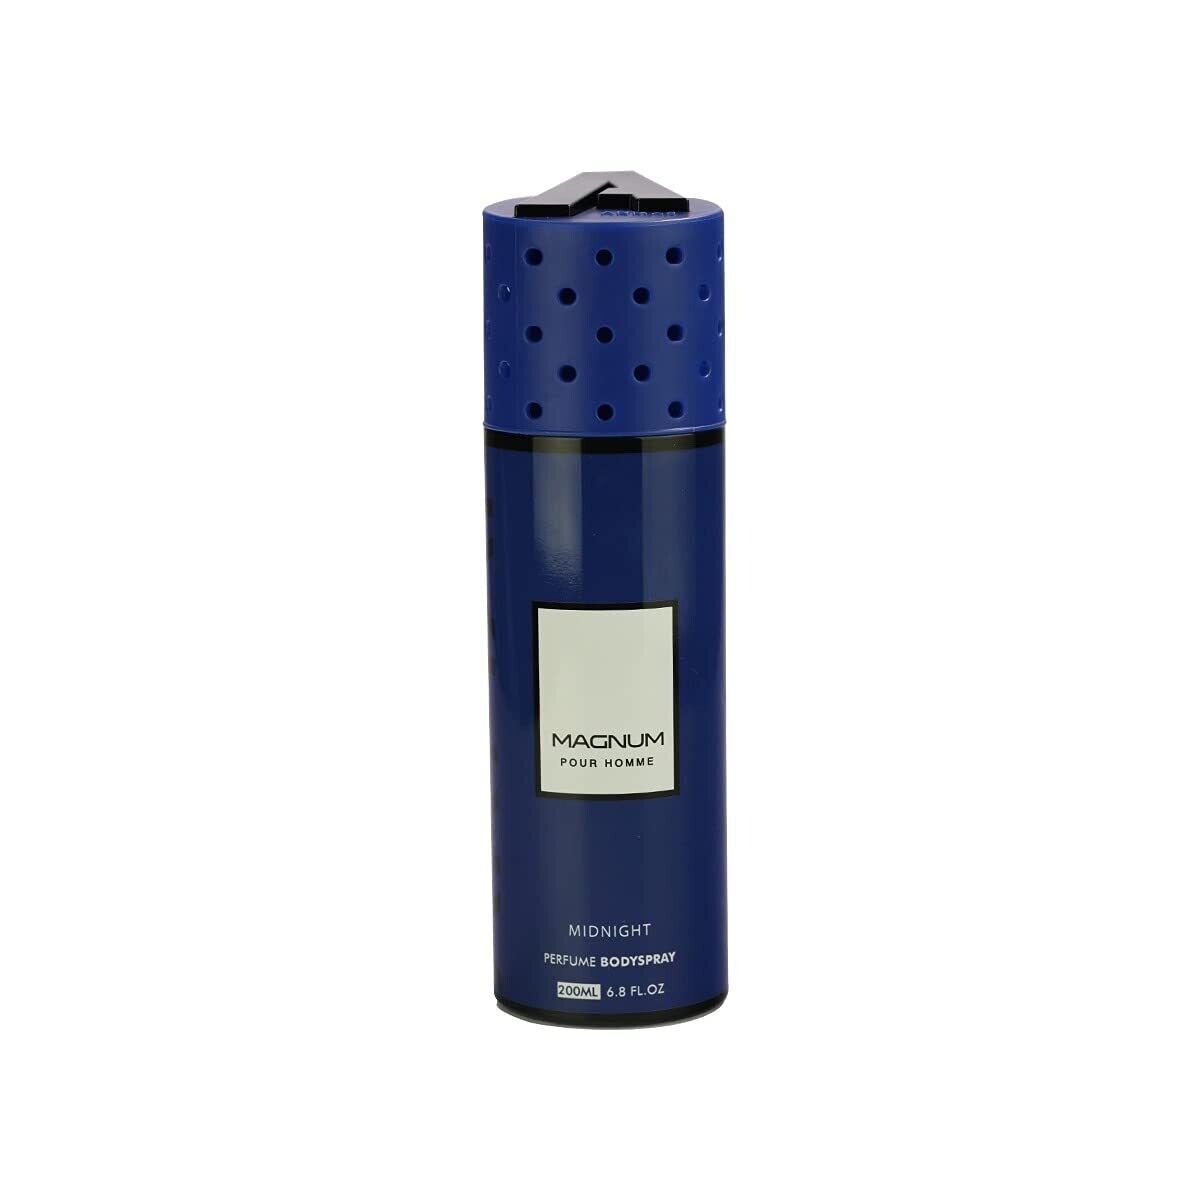 Armaf Magnum Pour Homme Midnight Perfume Body Spray 200ml / 6.8 FL.OZ.